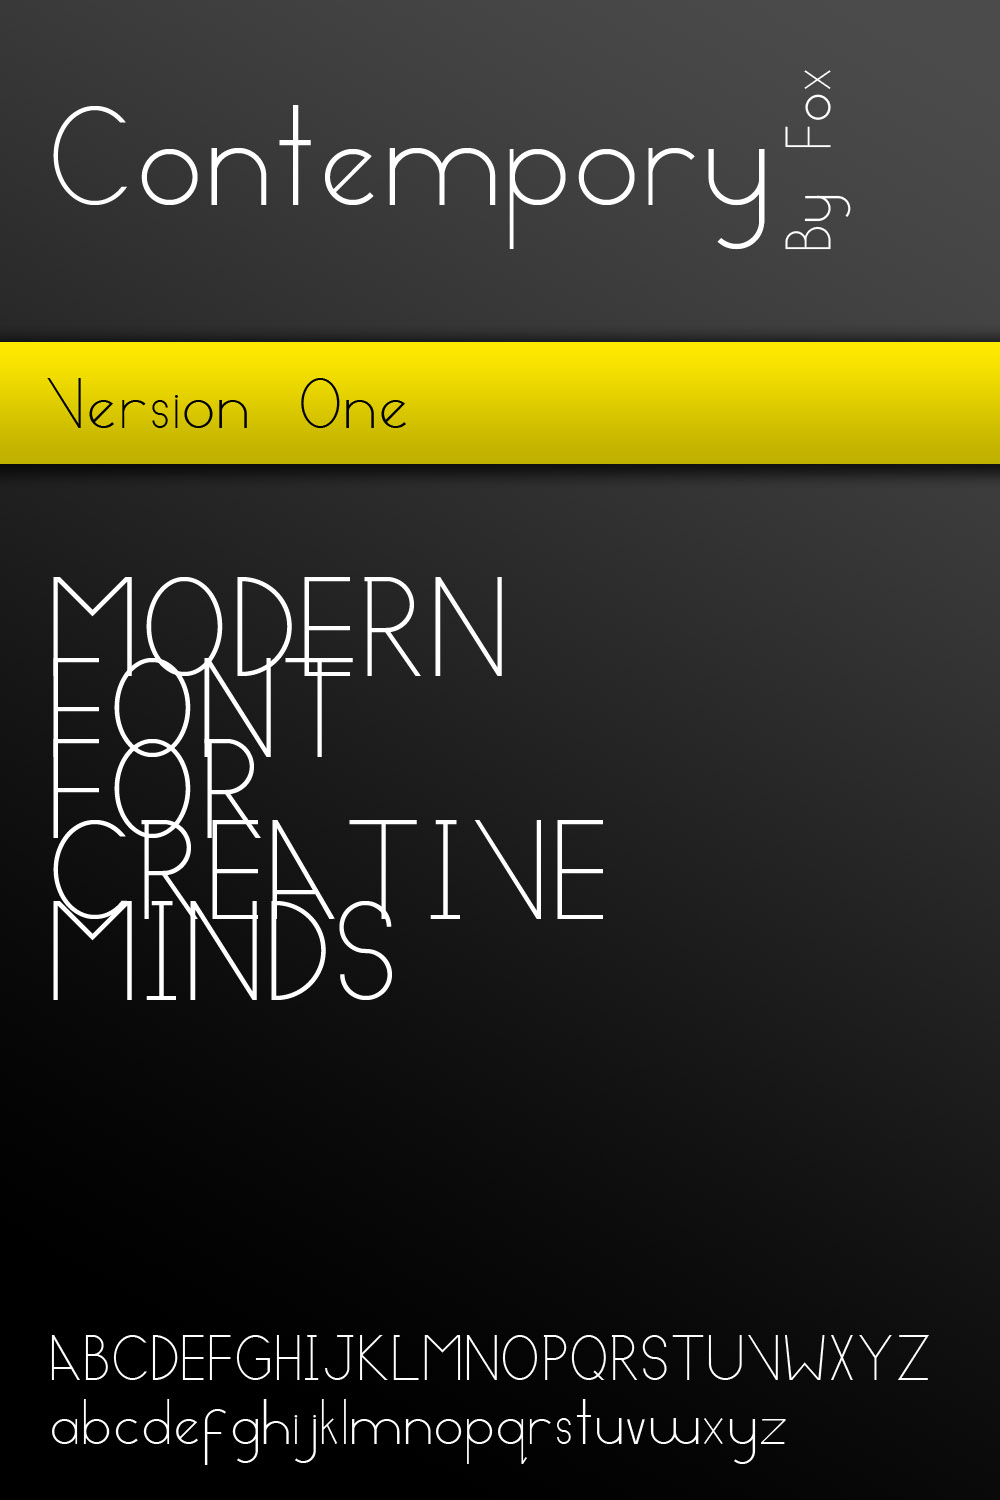 Modern Graphic Design Fonts